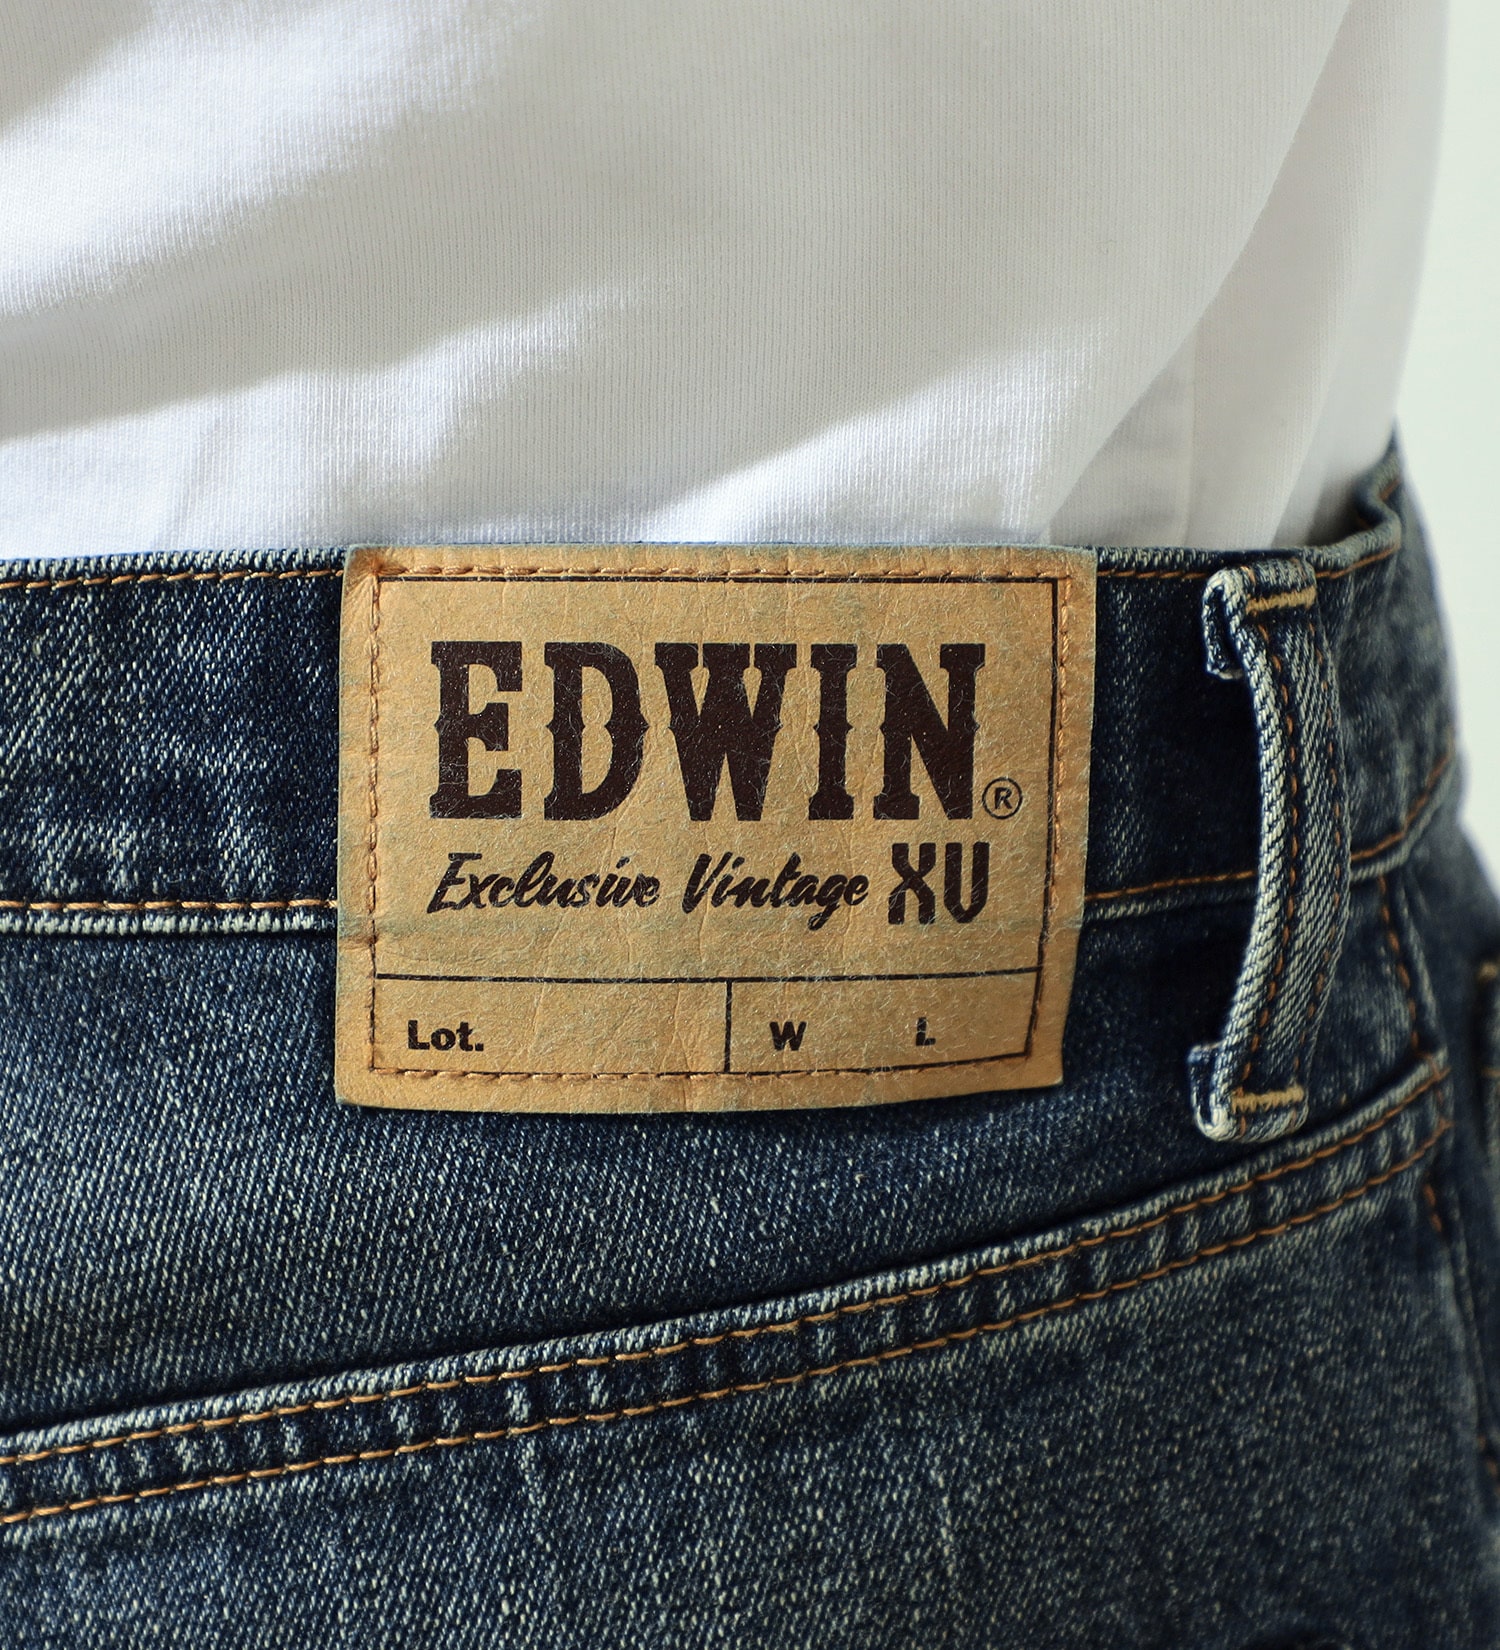 EDWIN(エドウイン)のXV レギュラーストレートデニムパンツ|パンツ/デニムパンツ/メンズ|中色ブルー